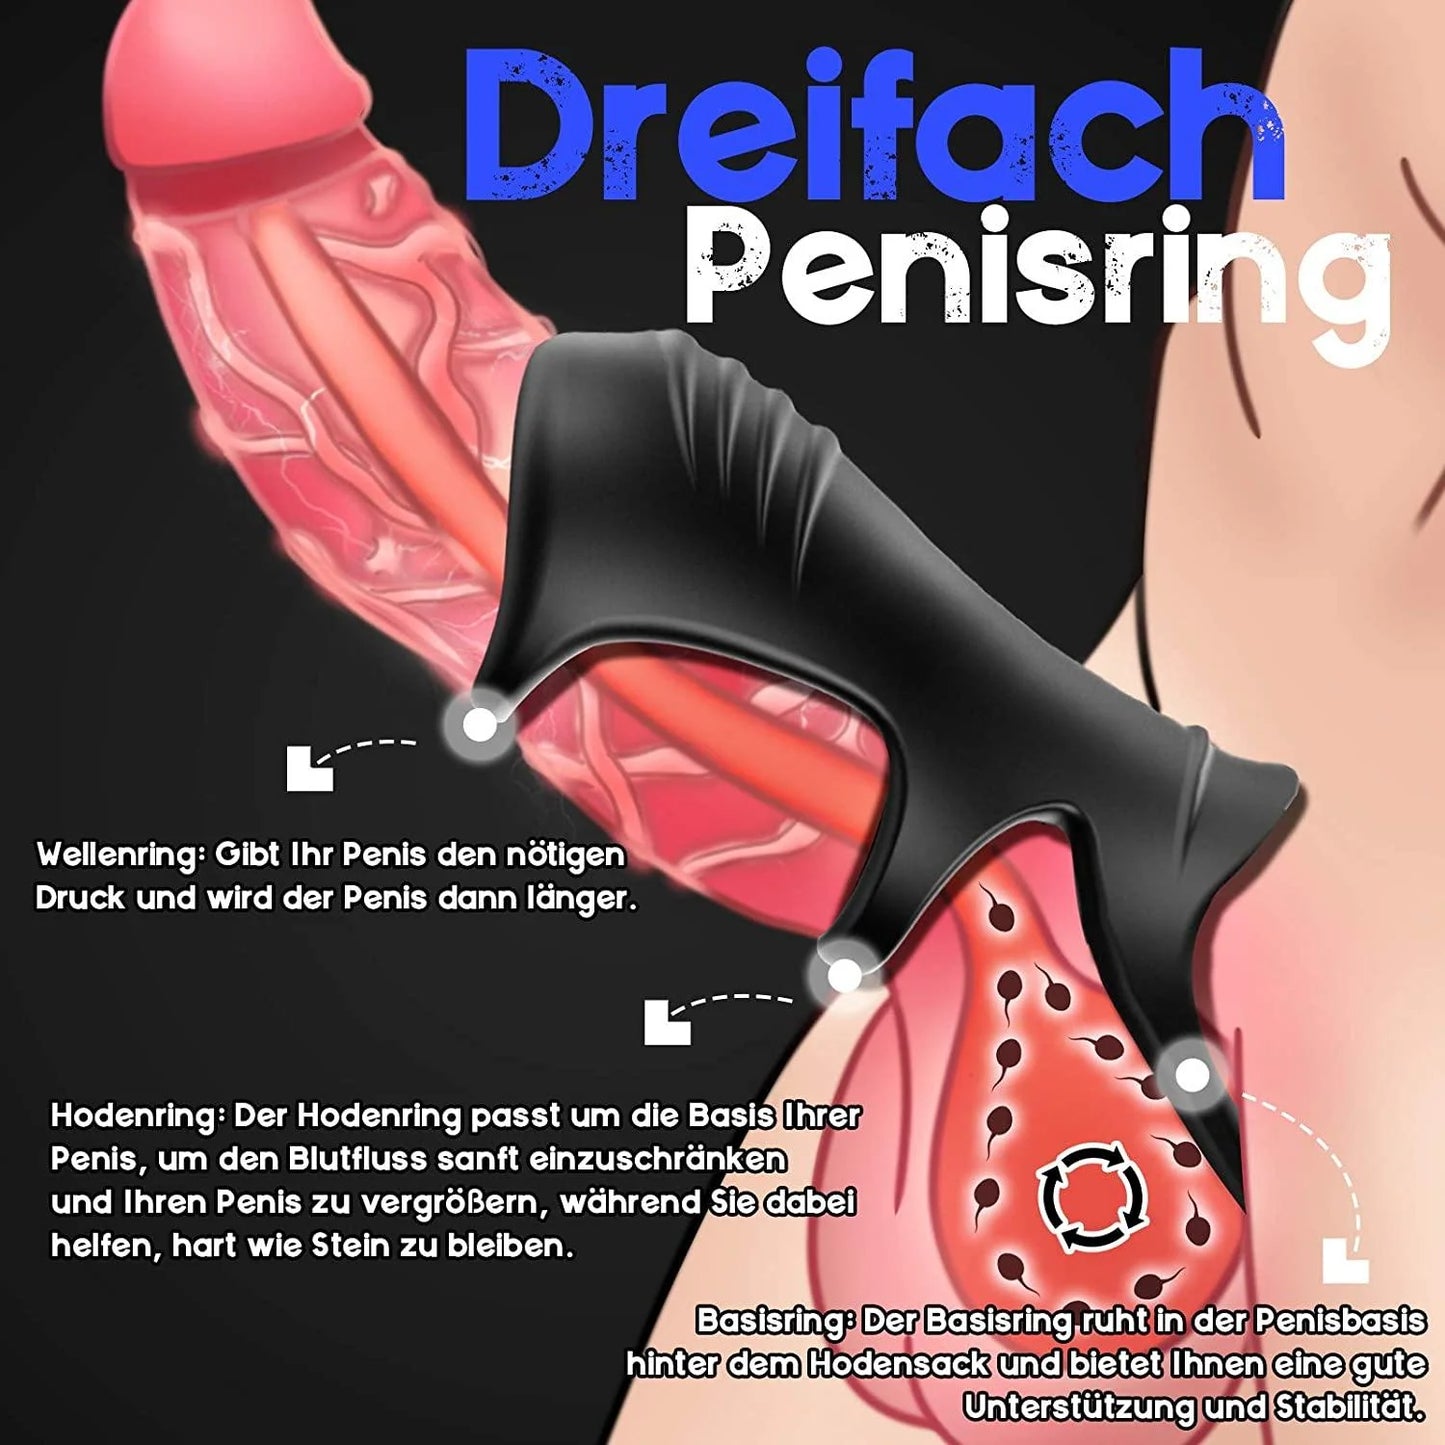 Triple cock ring testicle penis stimulating black